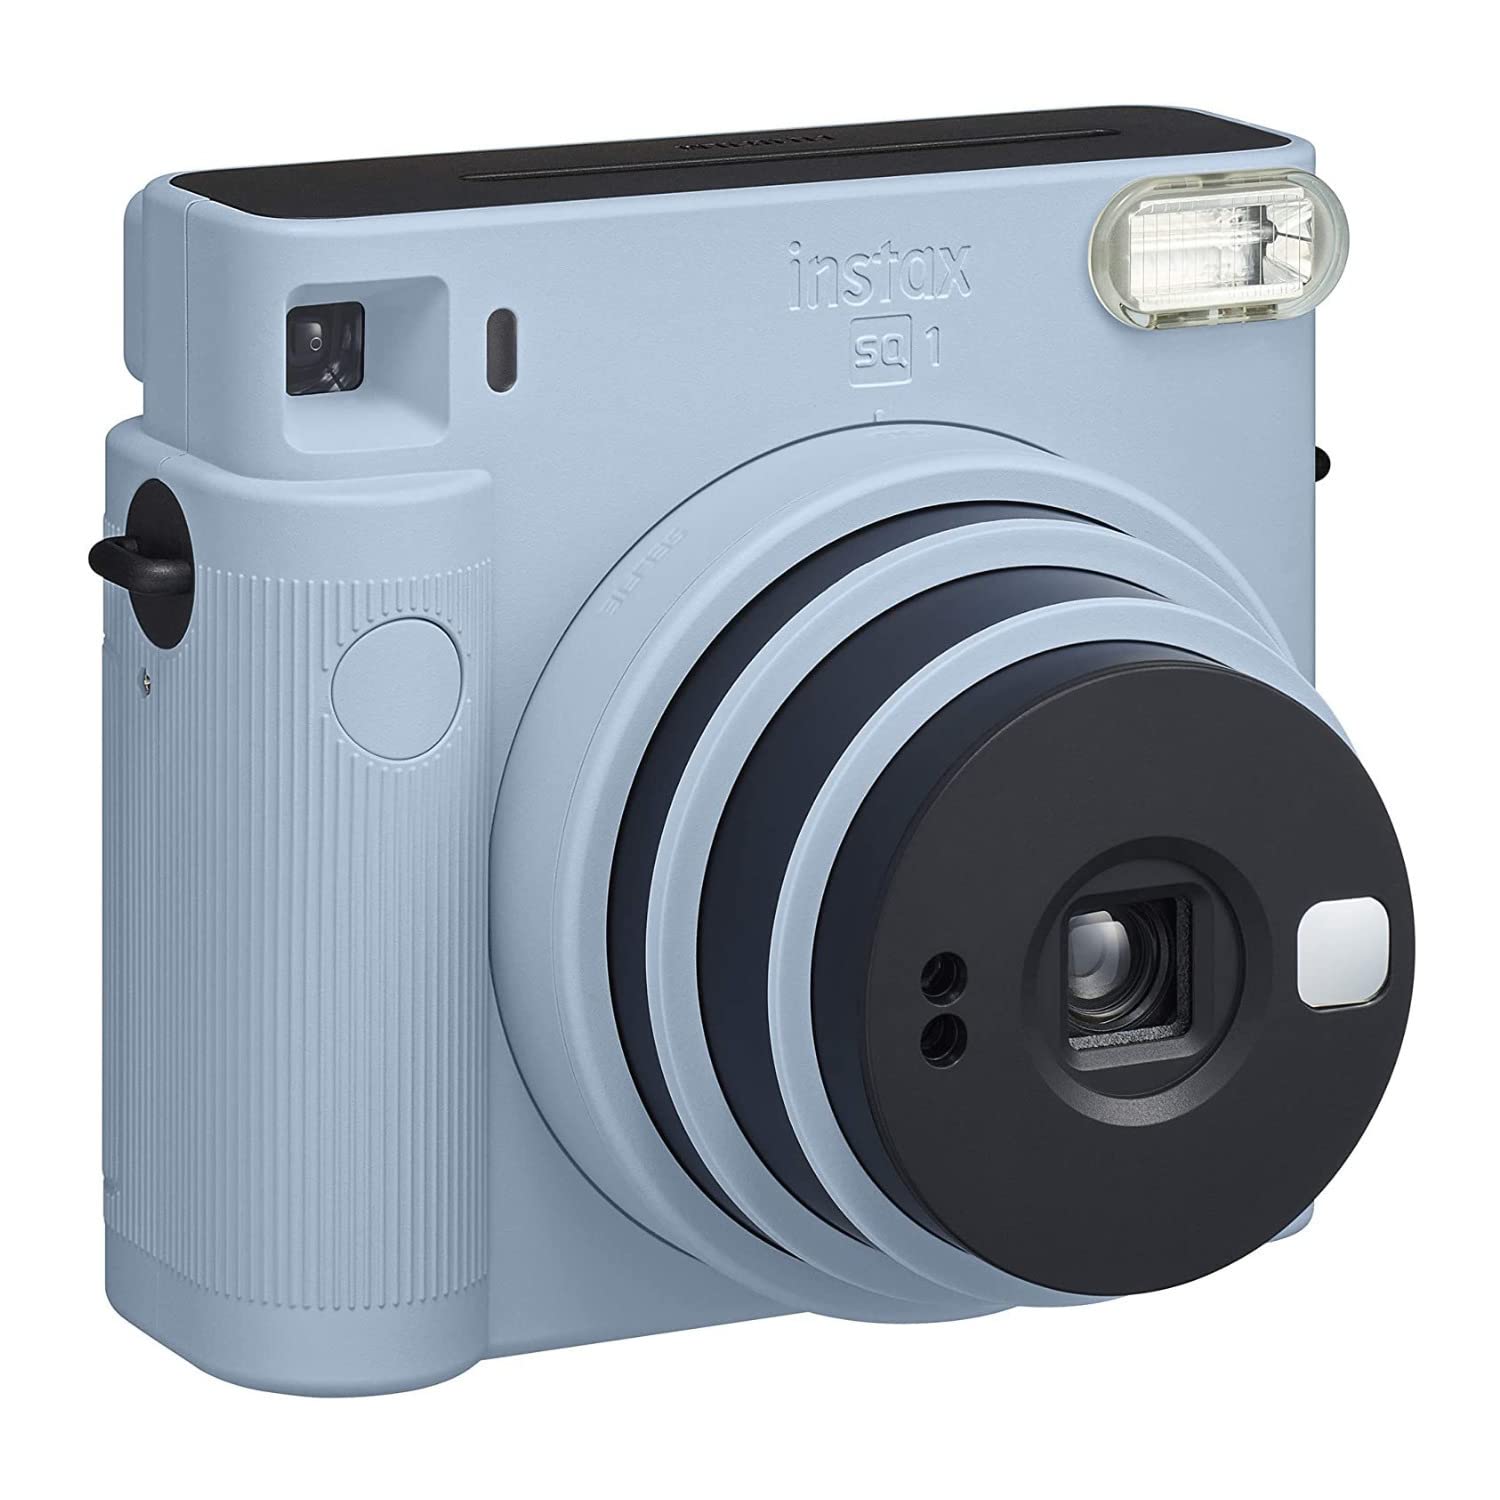 دوربین چاپ سریع دیجیتال فوجی Instax SQ1 (آبی)